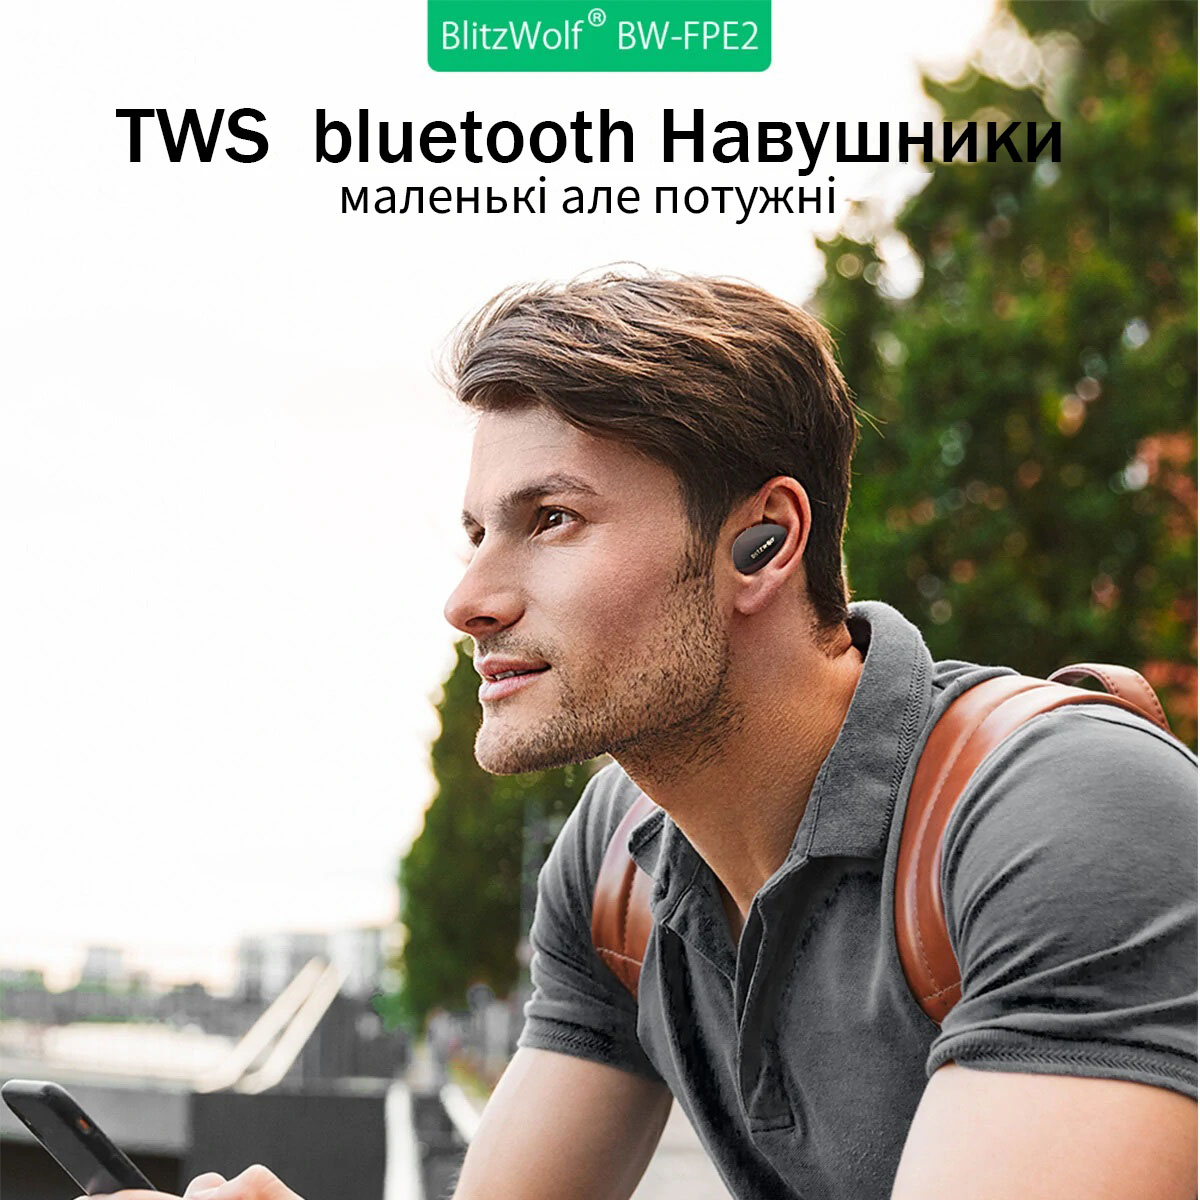 Навушники BlitzWolf BW-FPE2 TWS для Android, iPhone, iPad Black